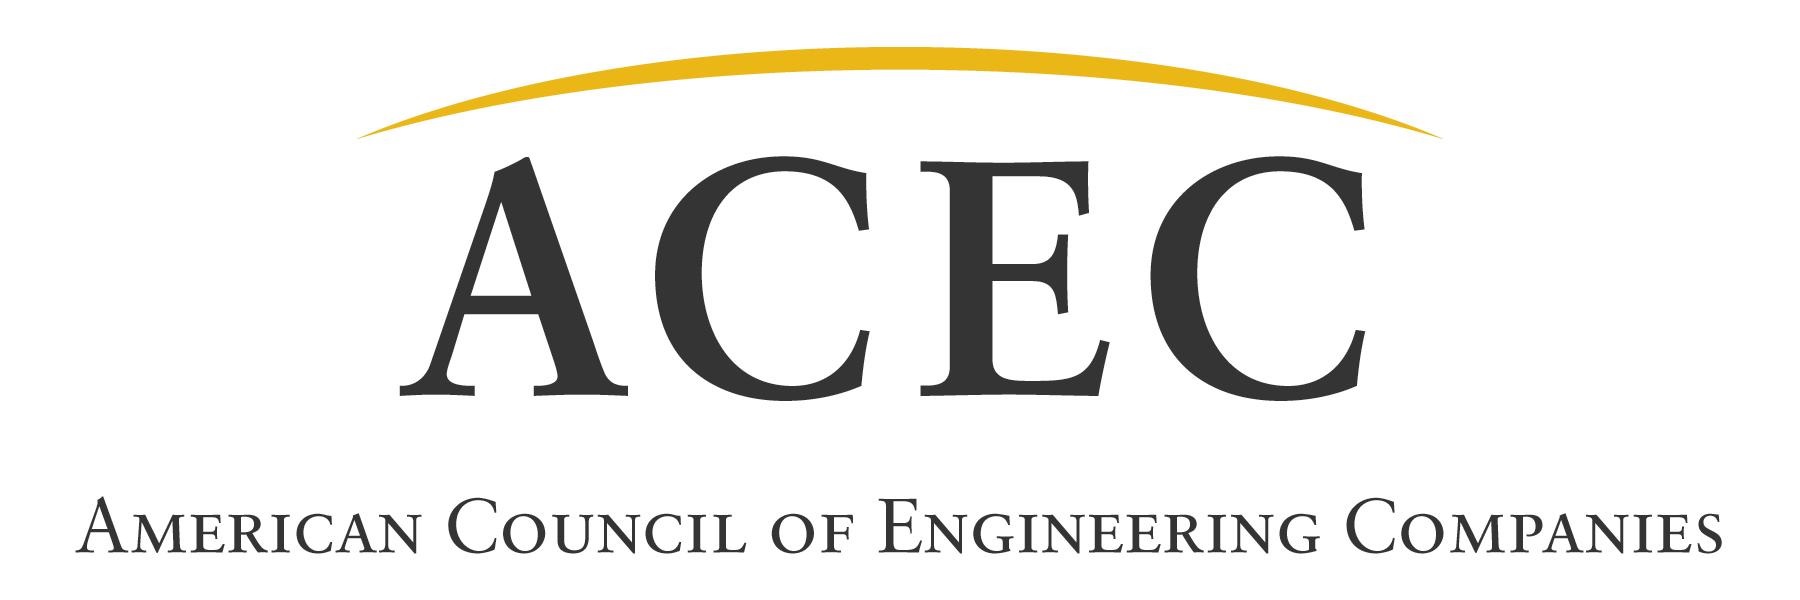 acec_logo_national